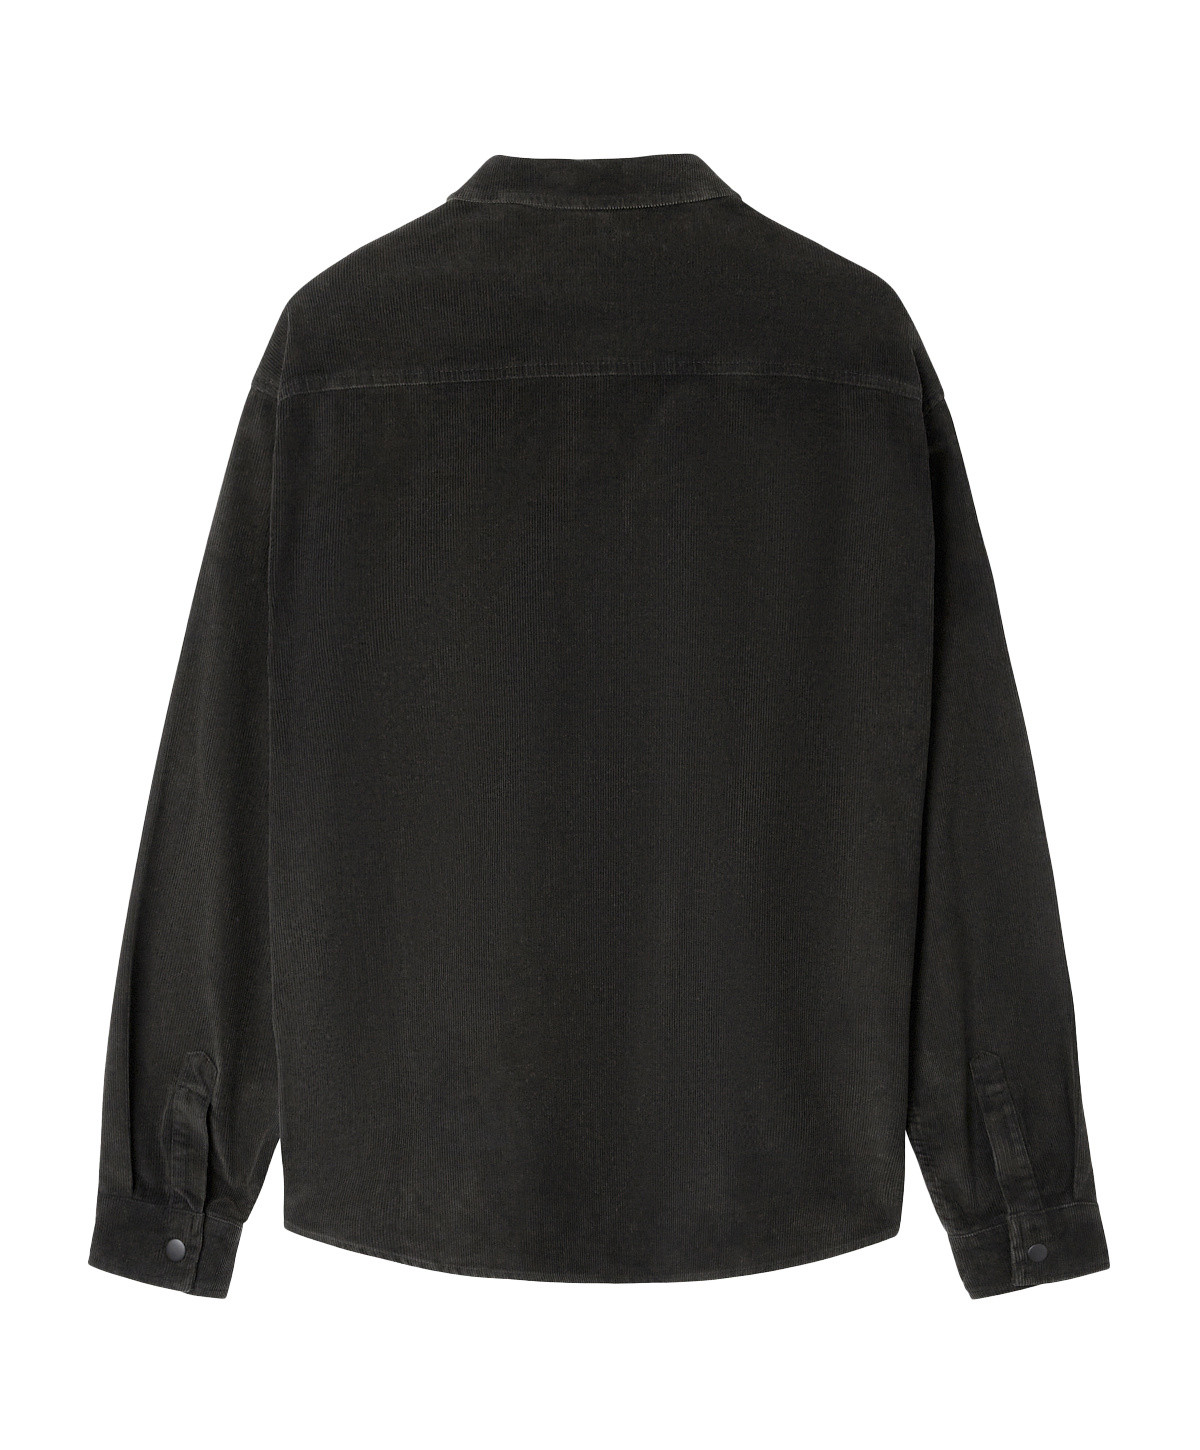 Funky - Corduroy shirt, Black, large image number 1